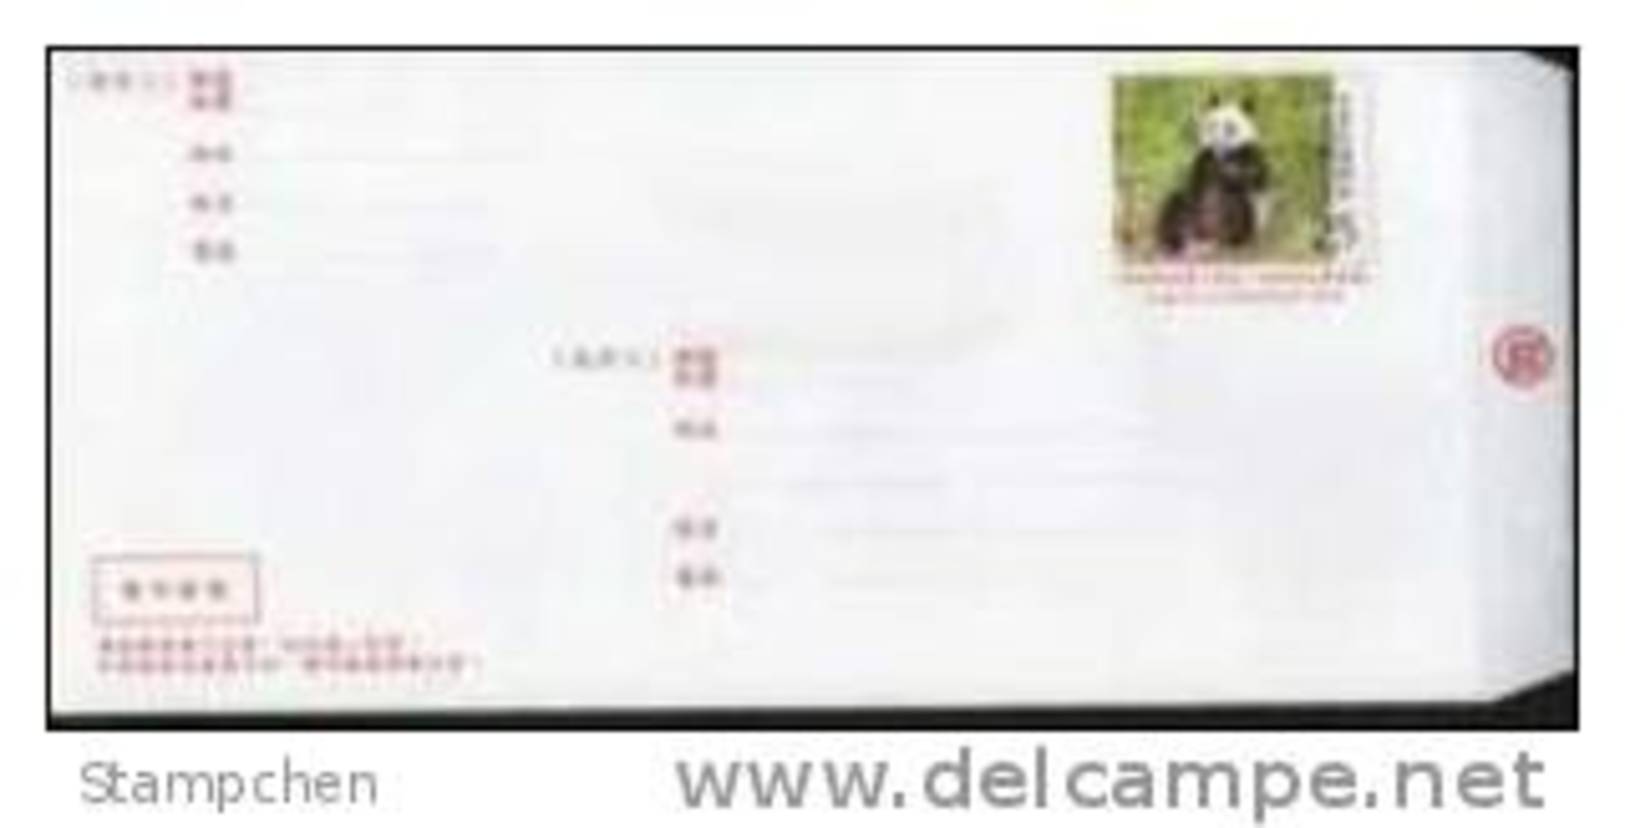 2009 Taiwan Pre-stamp Domestic Registered Cover Giant Panda Bear WWF Postal Stationary (B) - Postwaardestukken